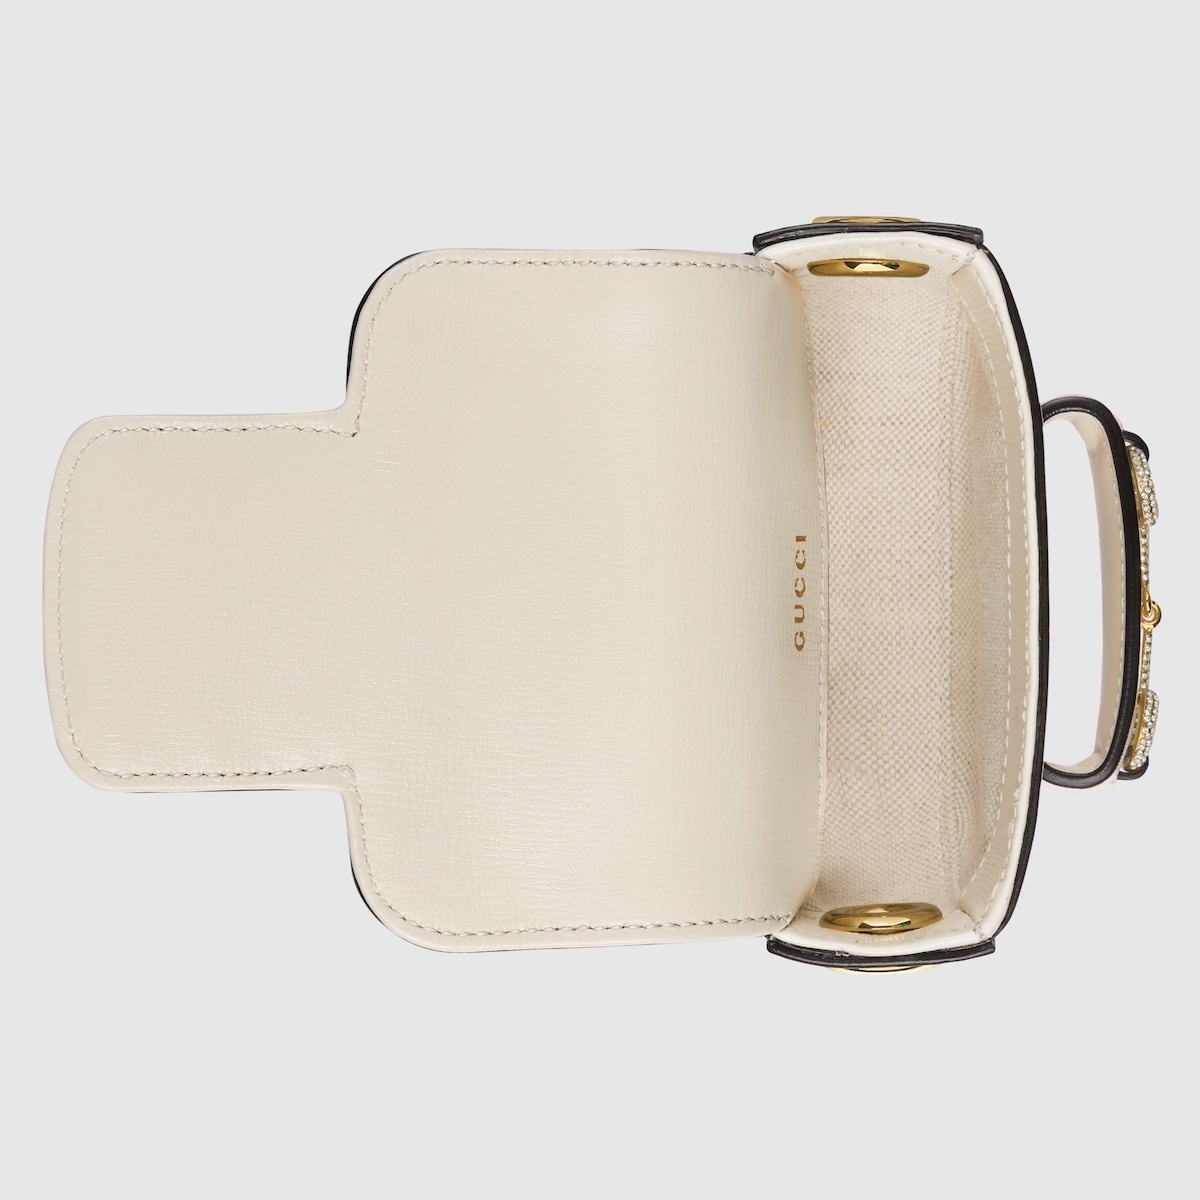 Gucci Horsebit 1955 rounded belt bag - 10